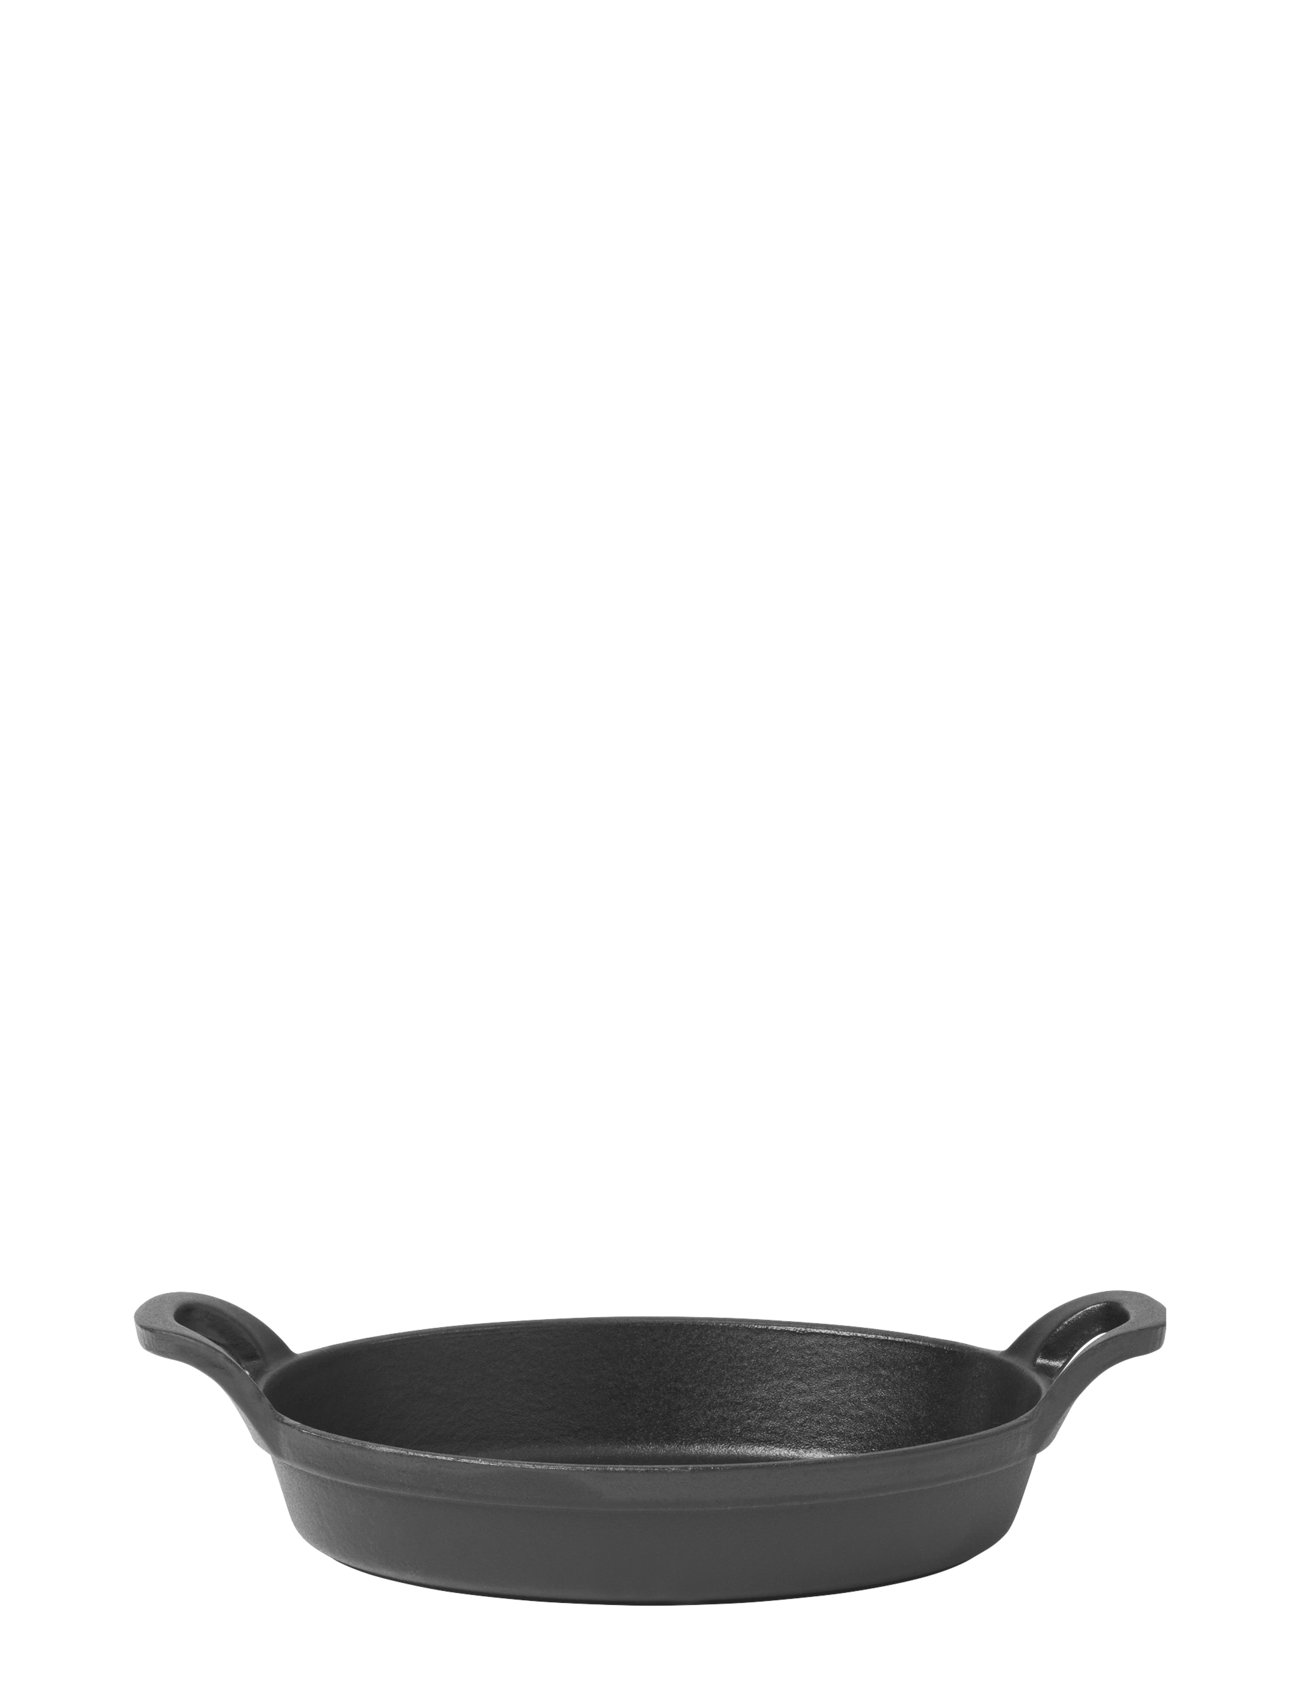 Pande Med 2 Greb Oval Garonne Mini 0,3 Liter 18 X 12 Cm Home Kitchen Pots & Pans Casserole Dishes Black Pillivuyt Gourmet